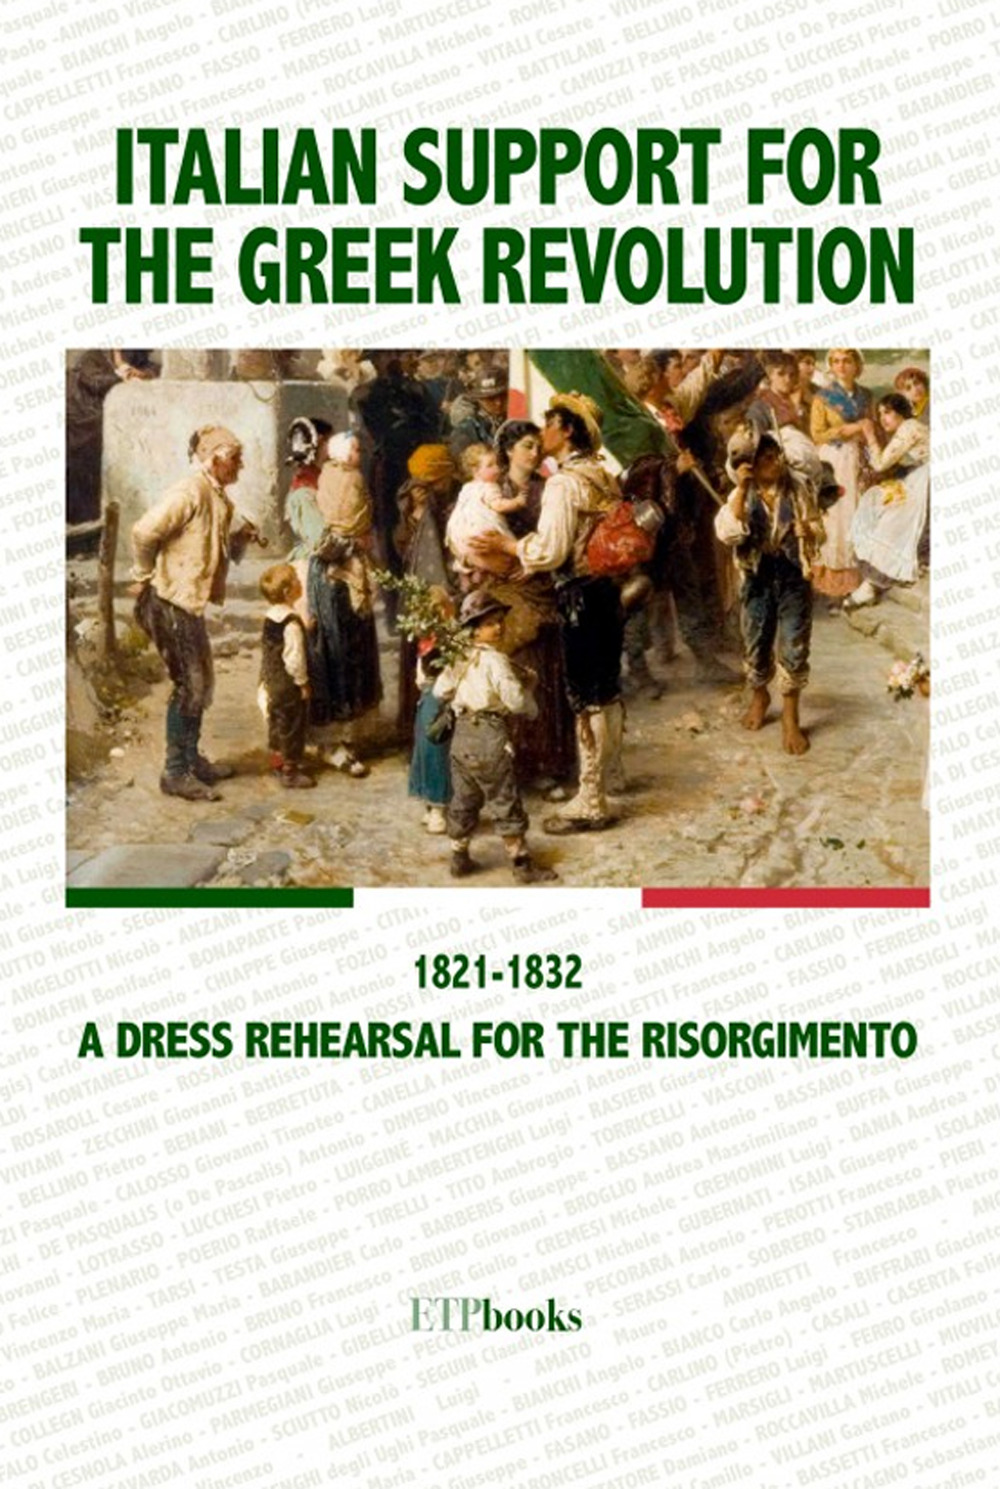 Italian support for the Greek revolution. 1821-1832. A dress rehearsal for the Risorgimento